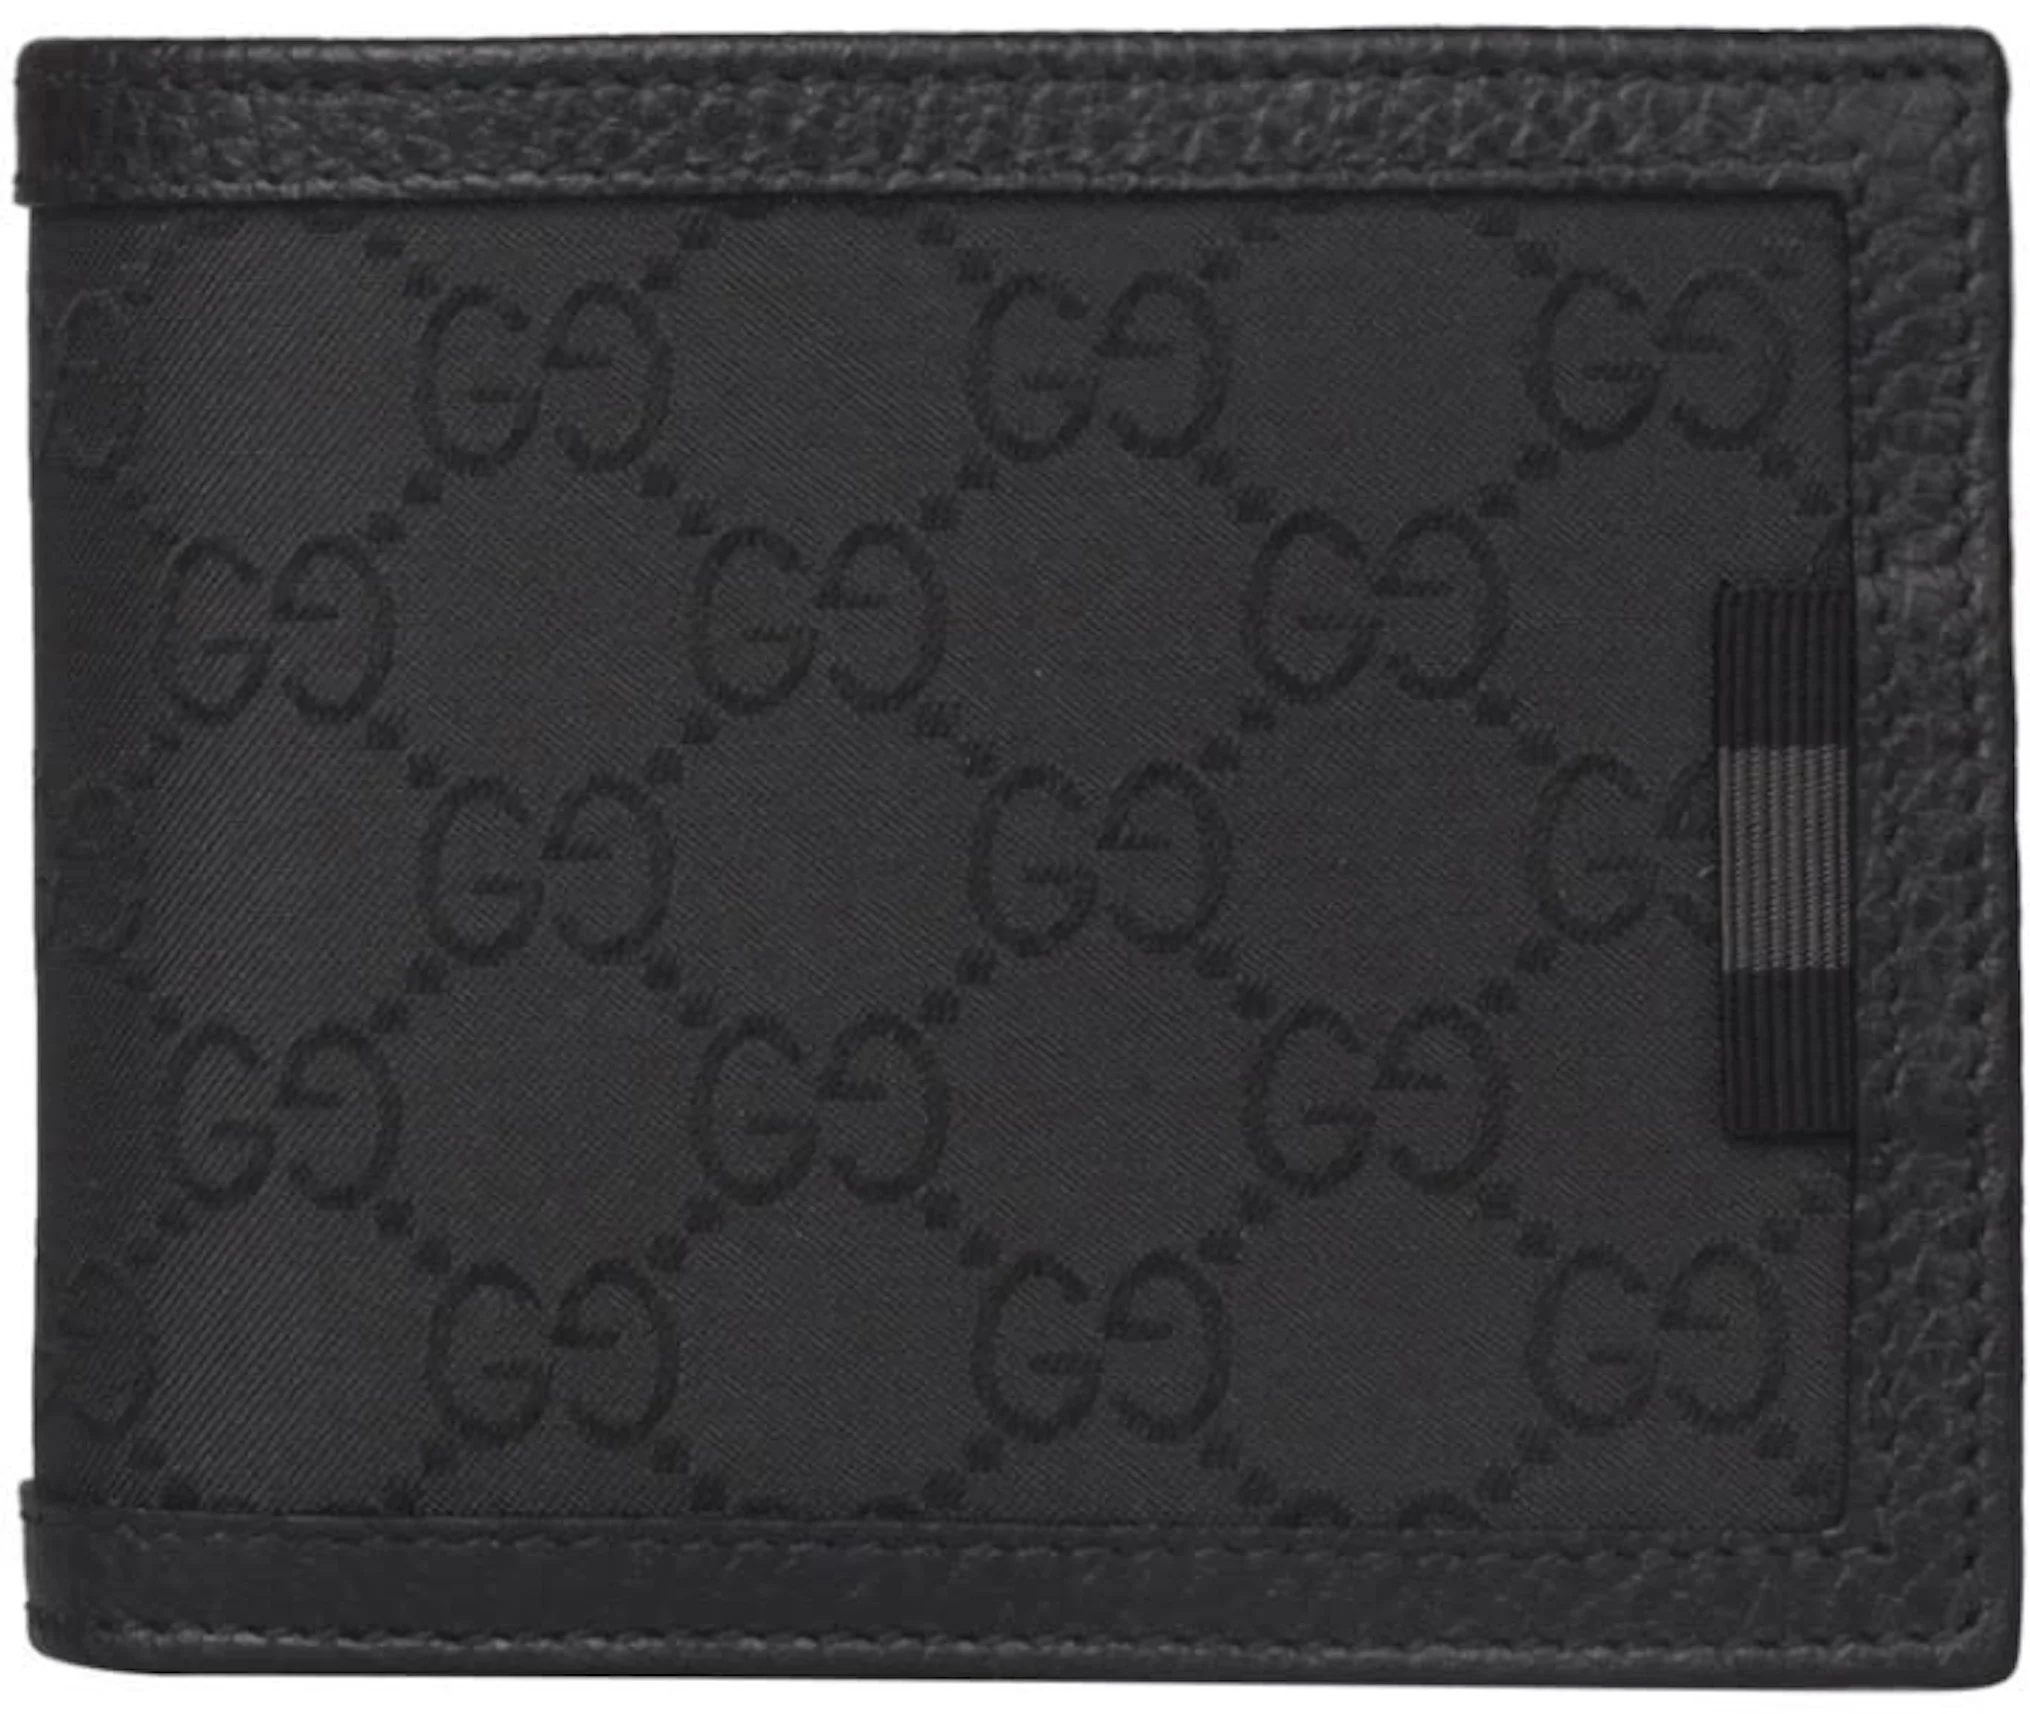 Gucci Bifold Wallet GG Nylon Black in Nylon/Leather - GB